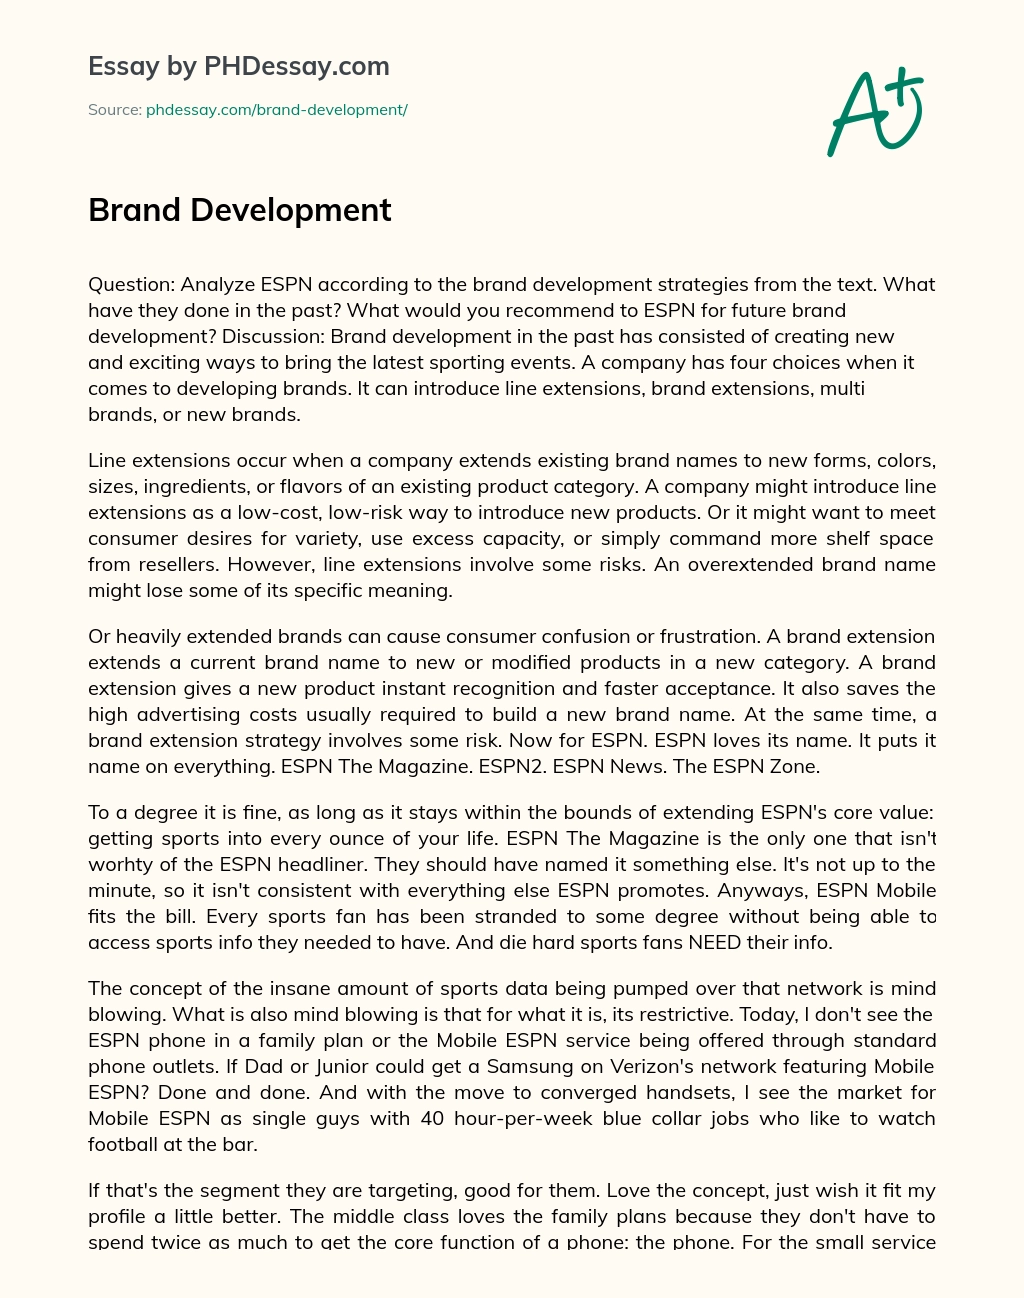 Brand Development essay